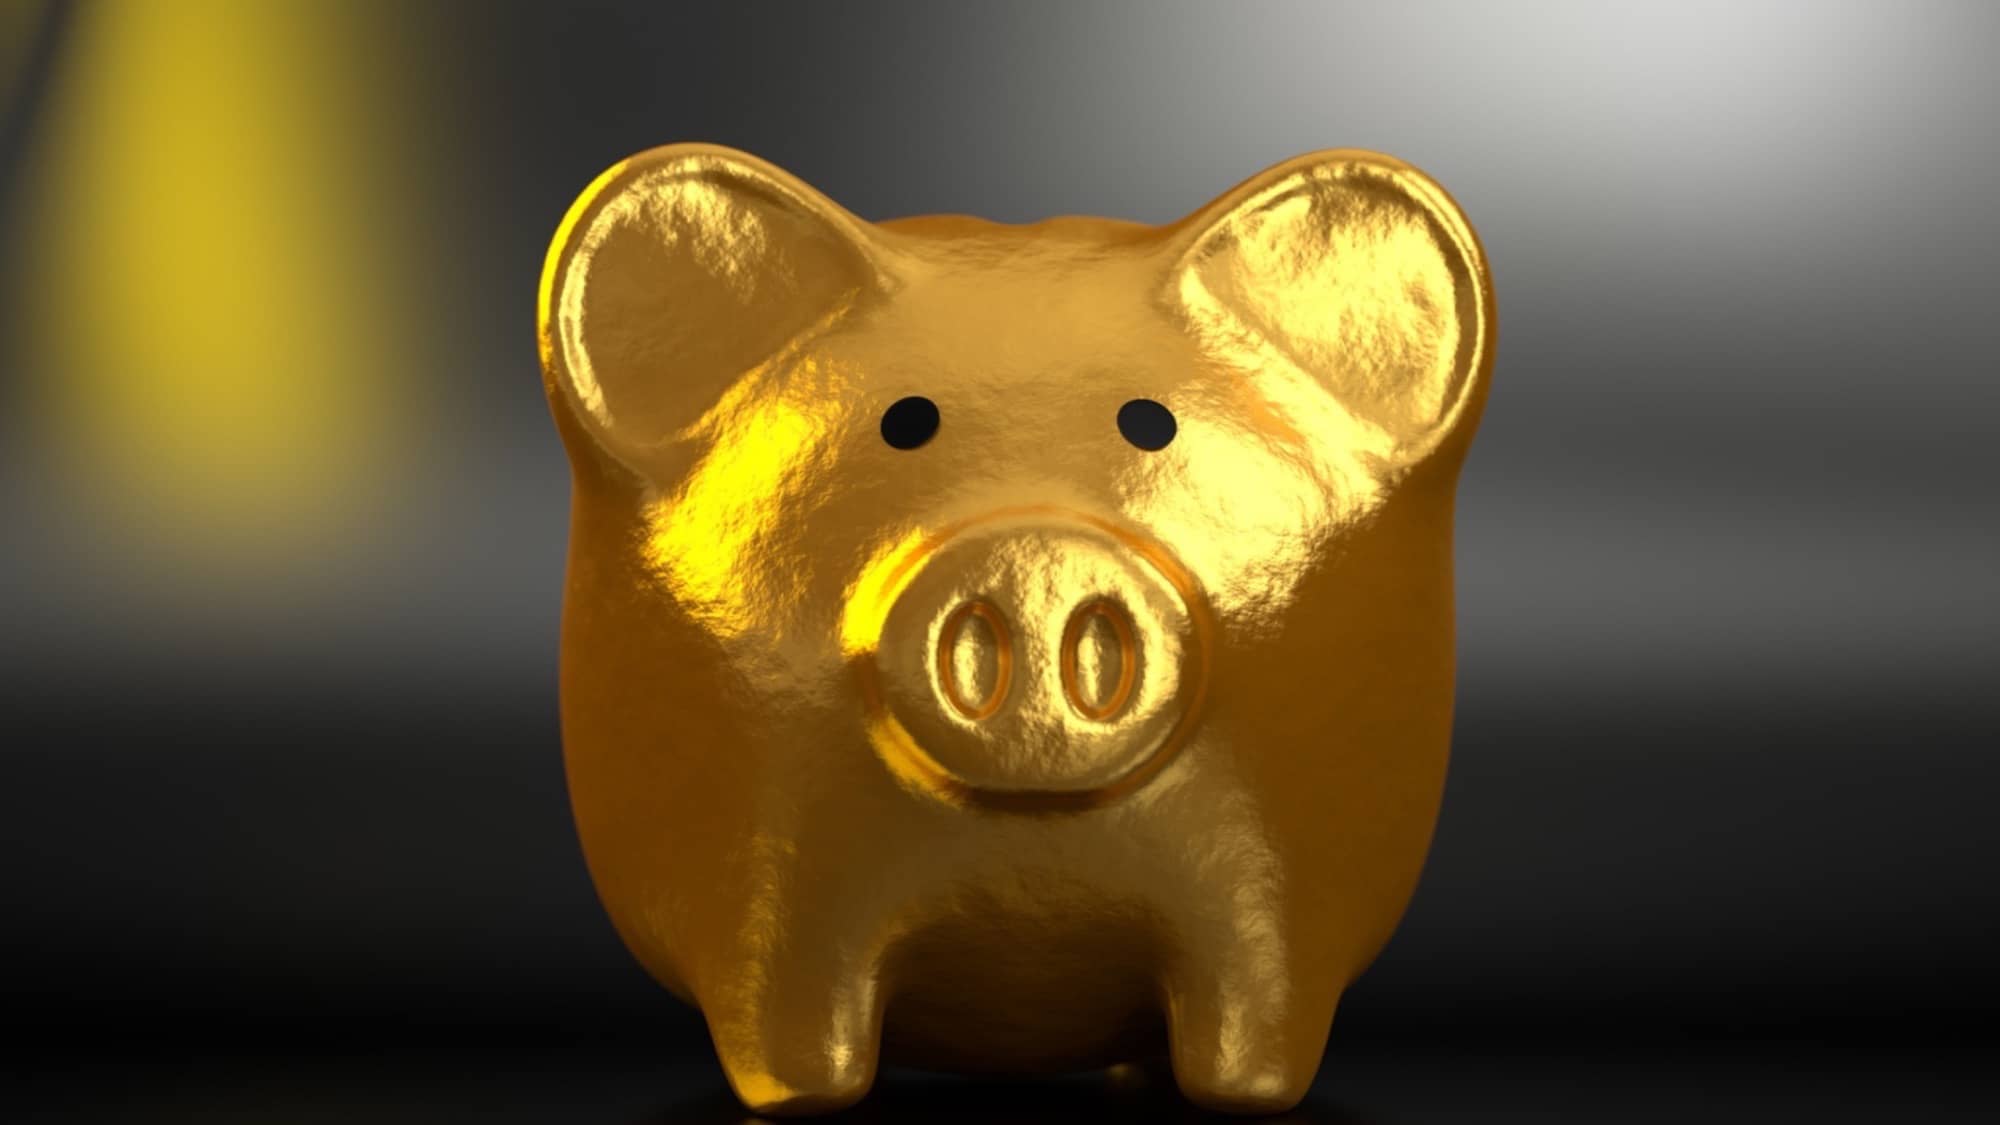 Head-on image of a golden piggy bank